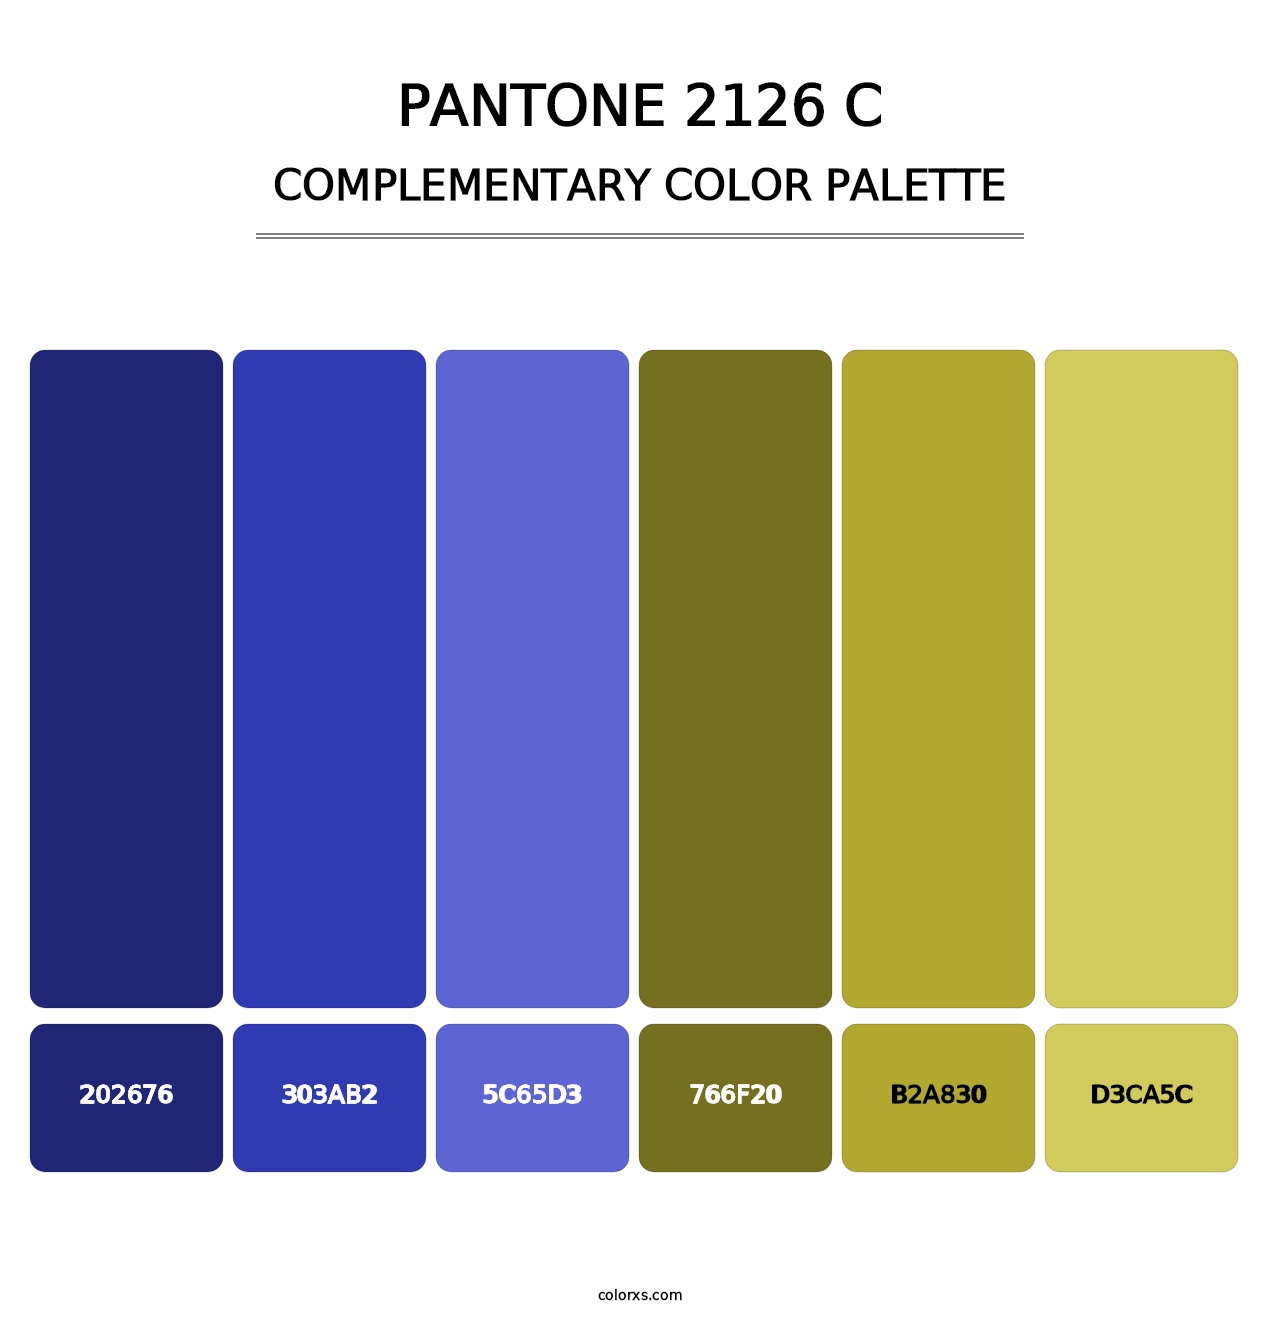 PANTONE 2126 C - Complementary Color Palette